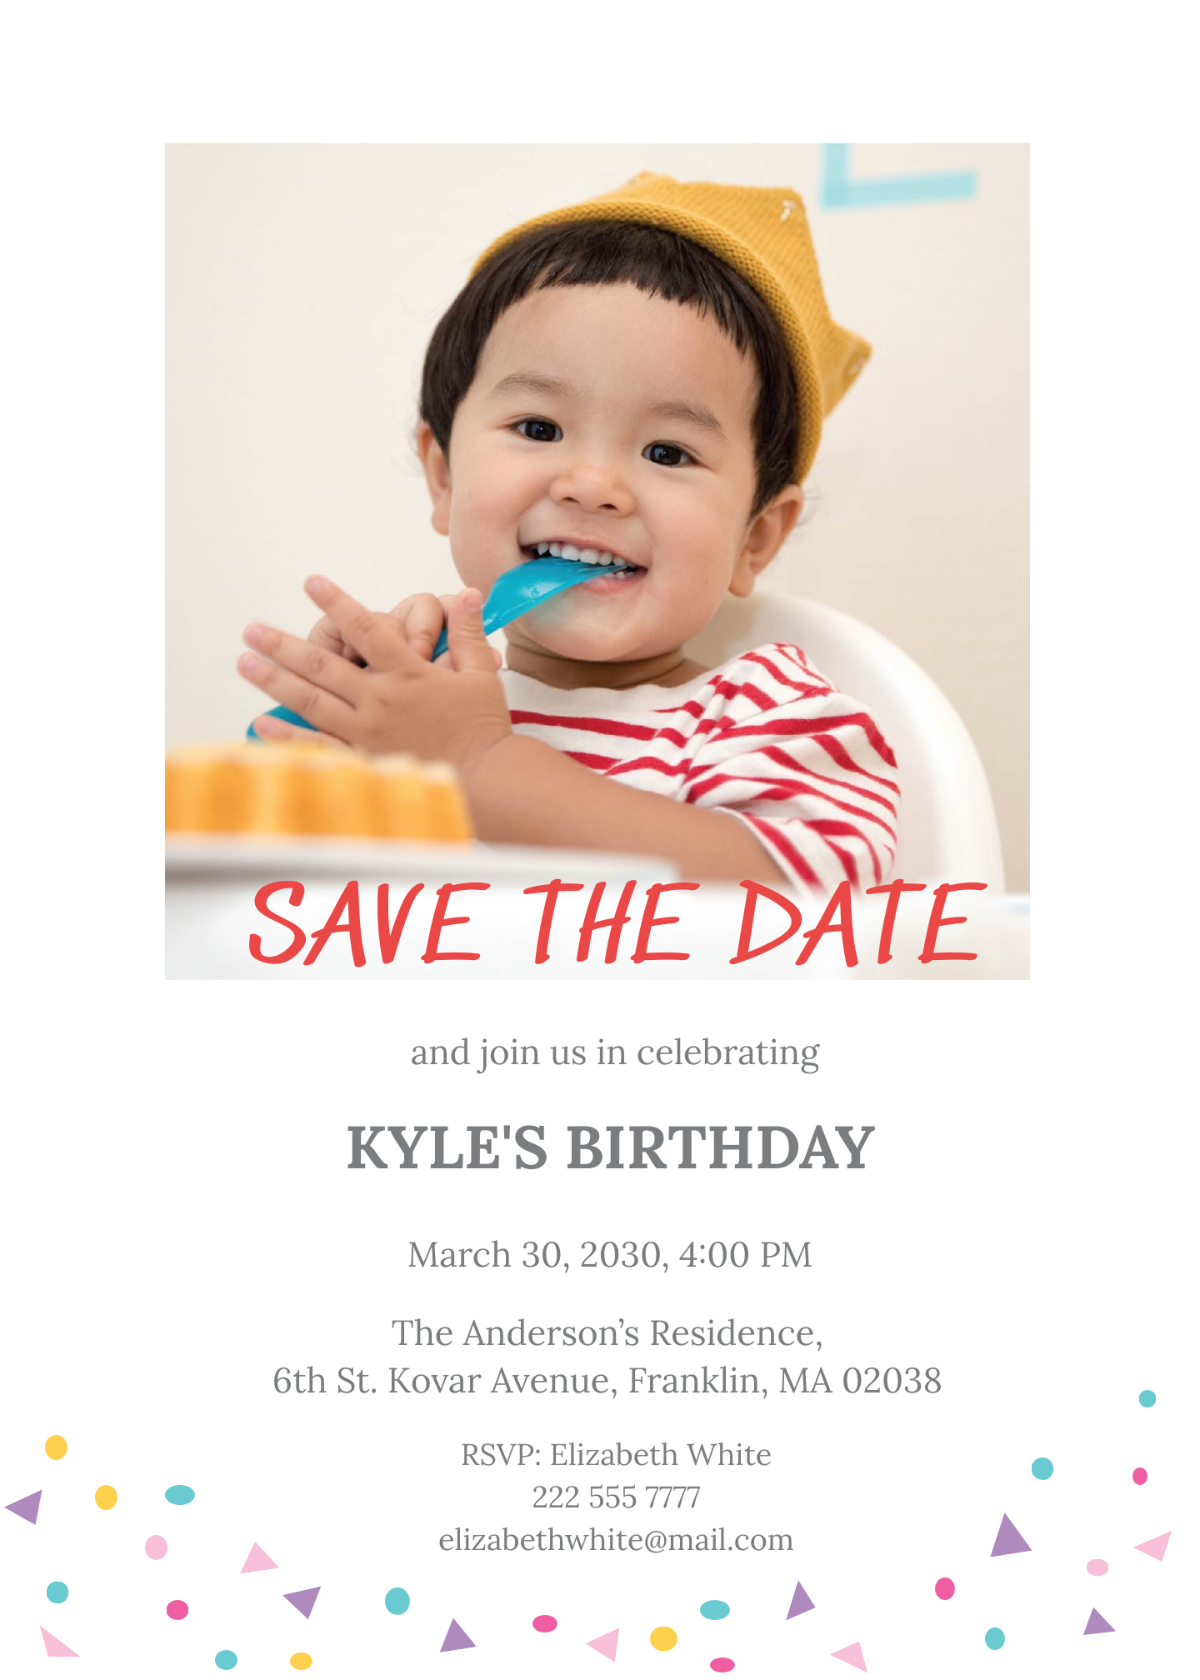 Save the Date Birthday Invitation